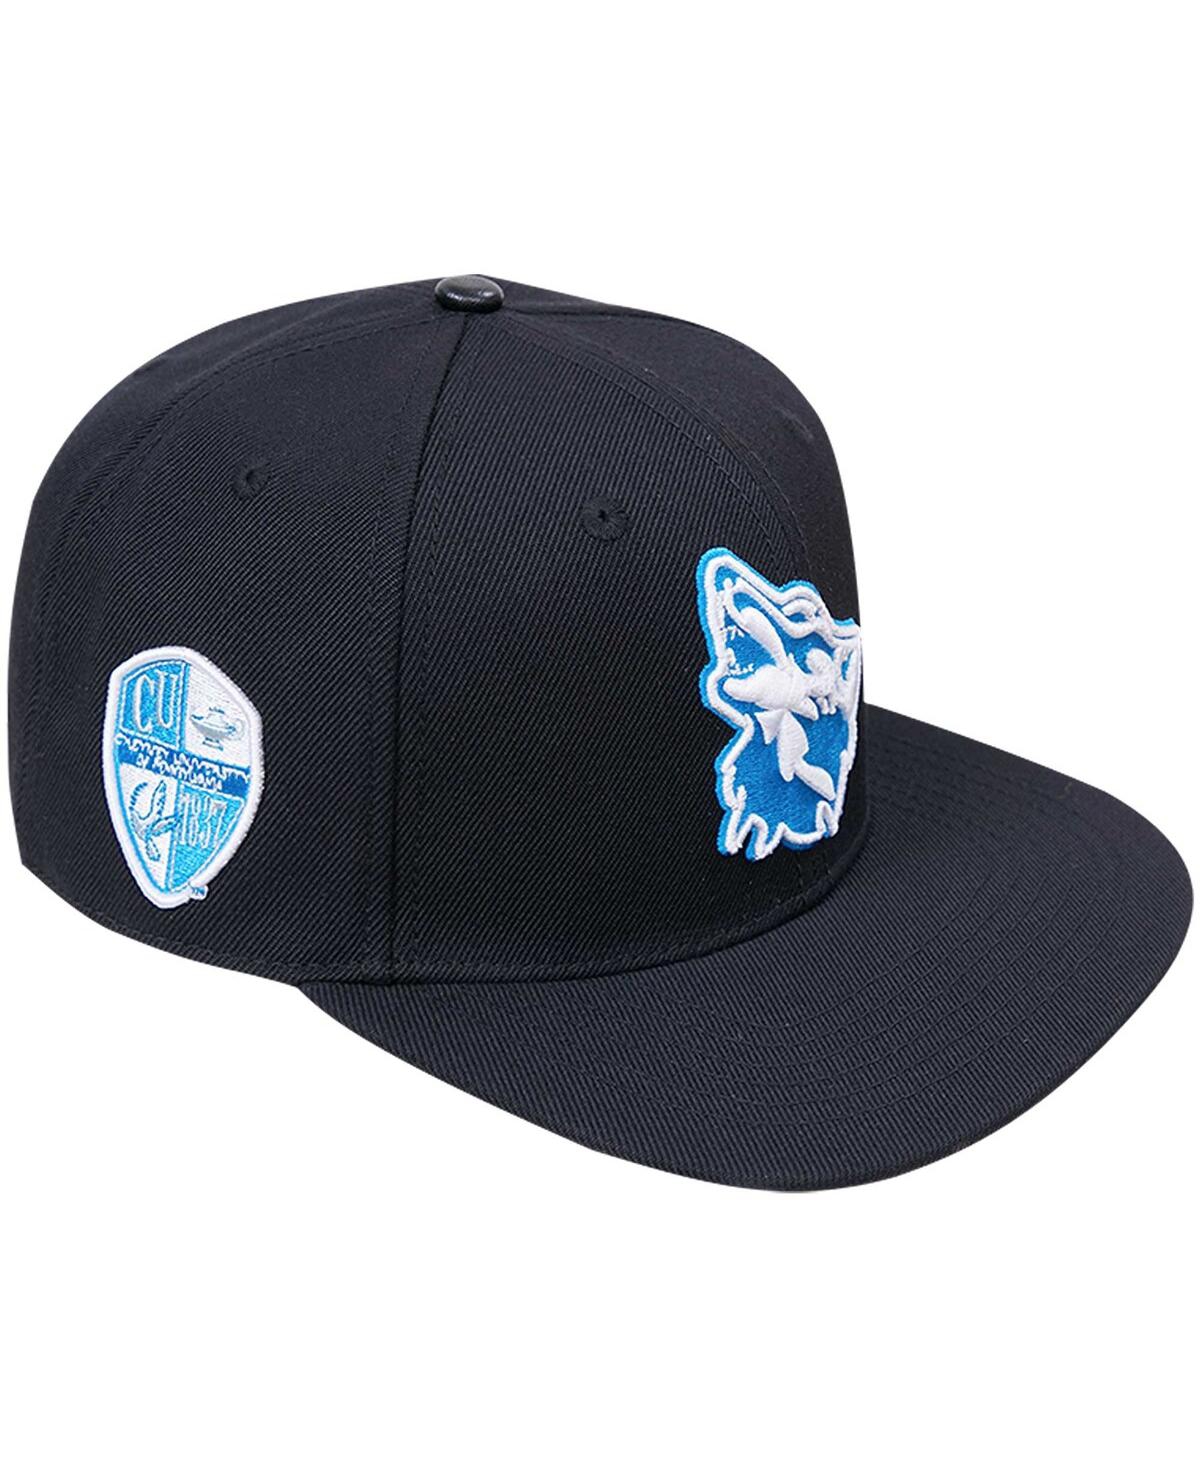 Shop Pro Standard Men's  Black Cheyney Wolves Arch Over Logo Evergreen Snapback Hat